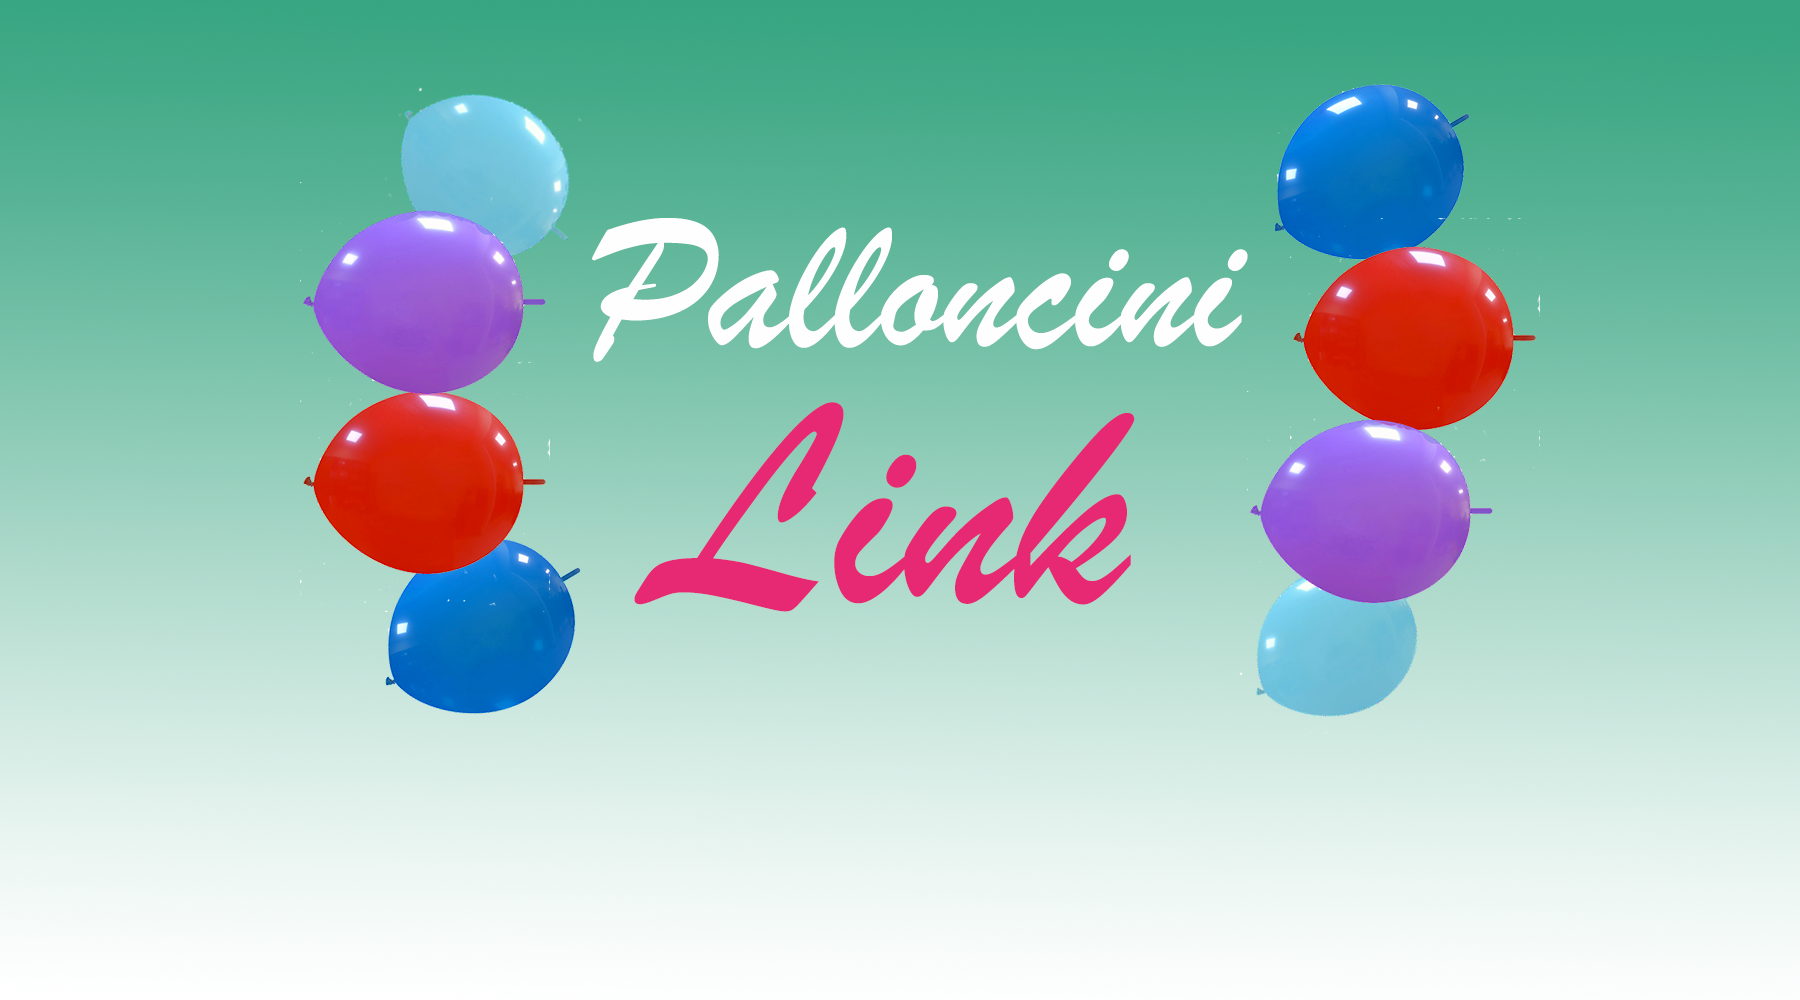 Belbal Palloncini Happy Birthday 6 pezzi